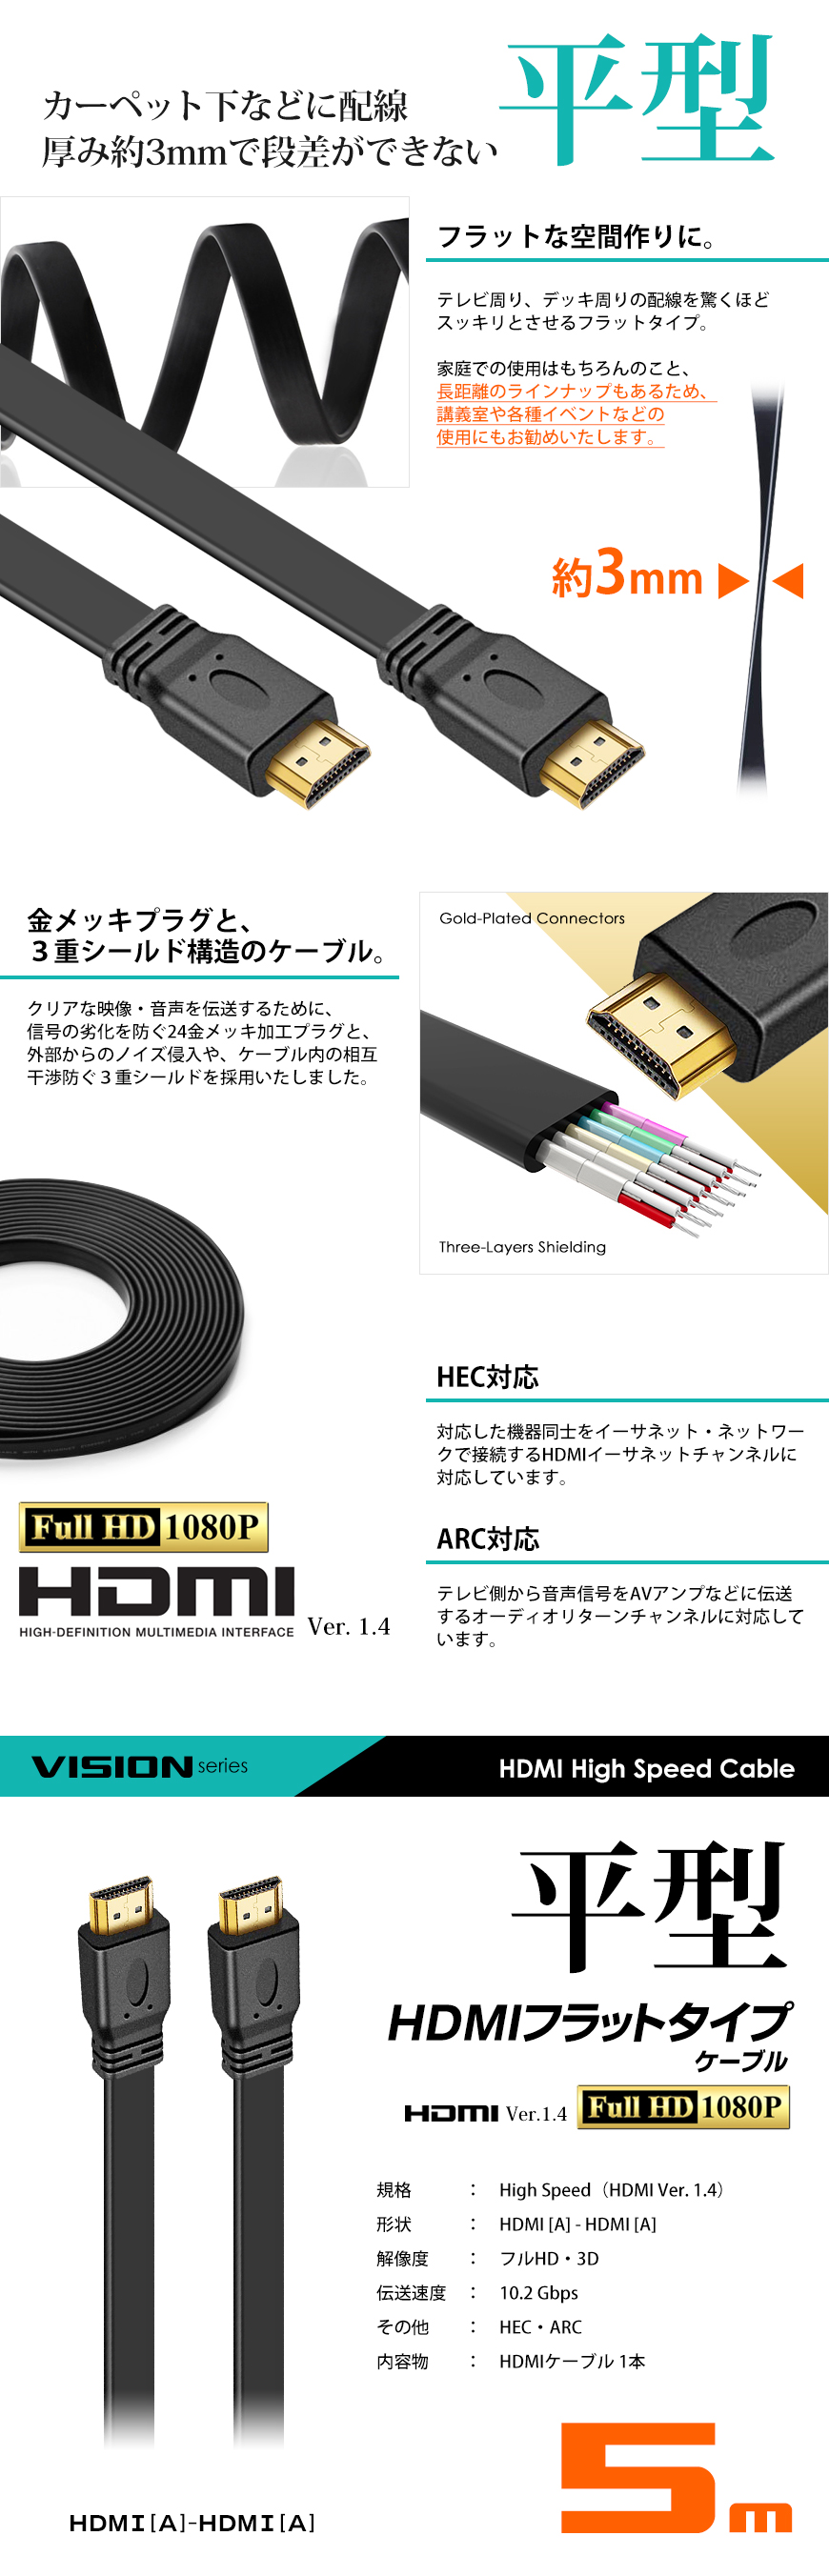 HDMIフラットケーブル FLS2-02